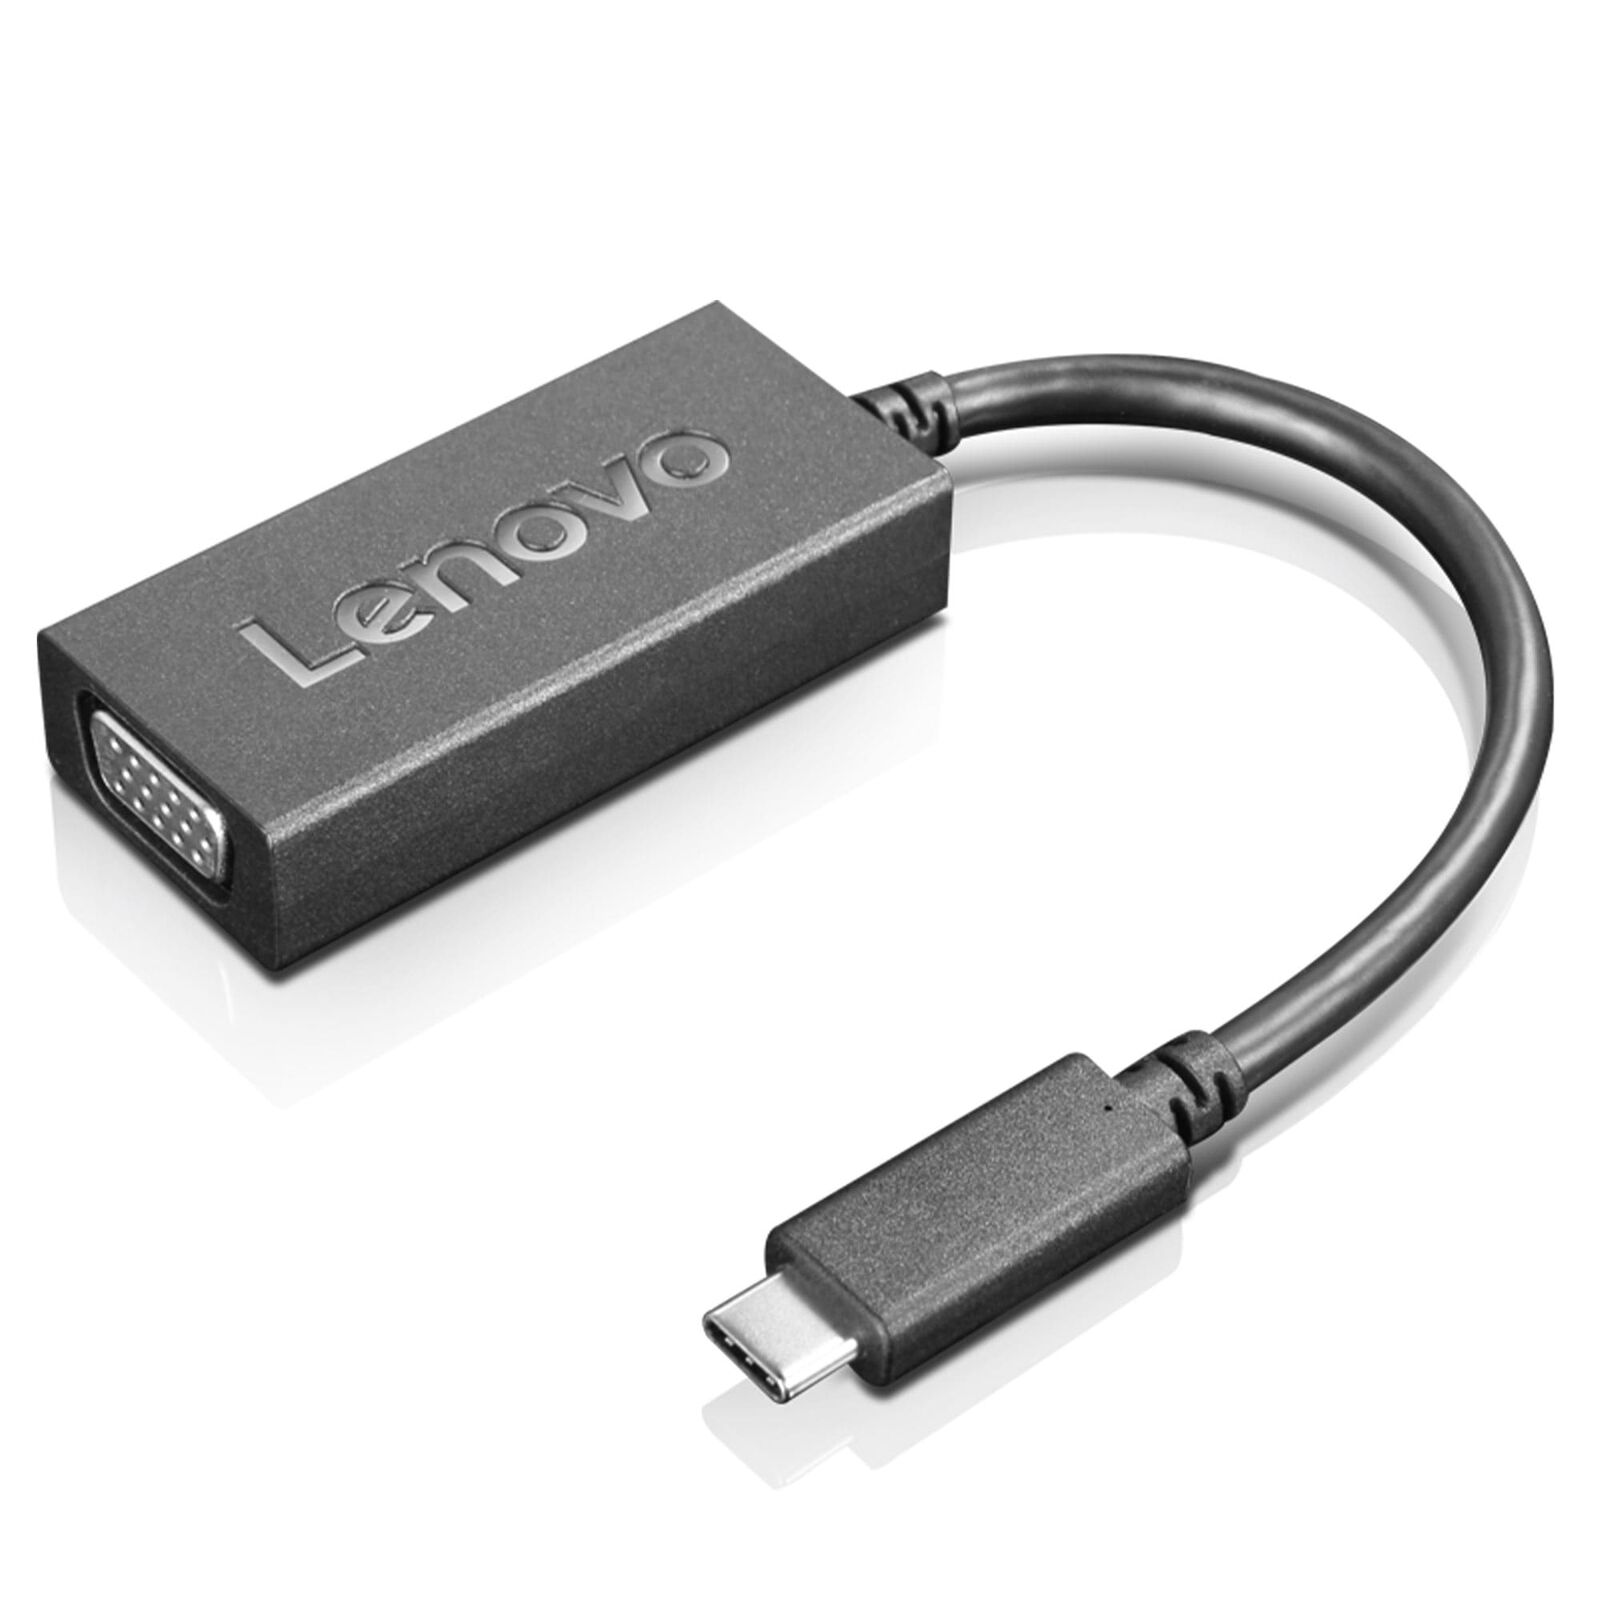 Lenovo USB-C to VGA Adapter